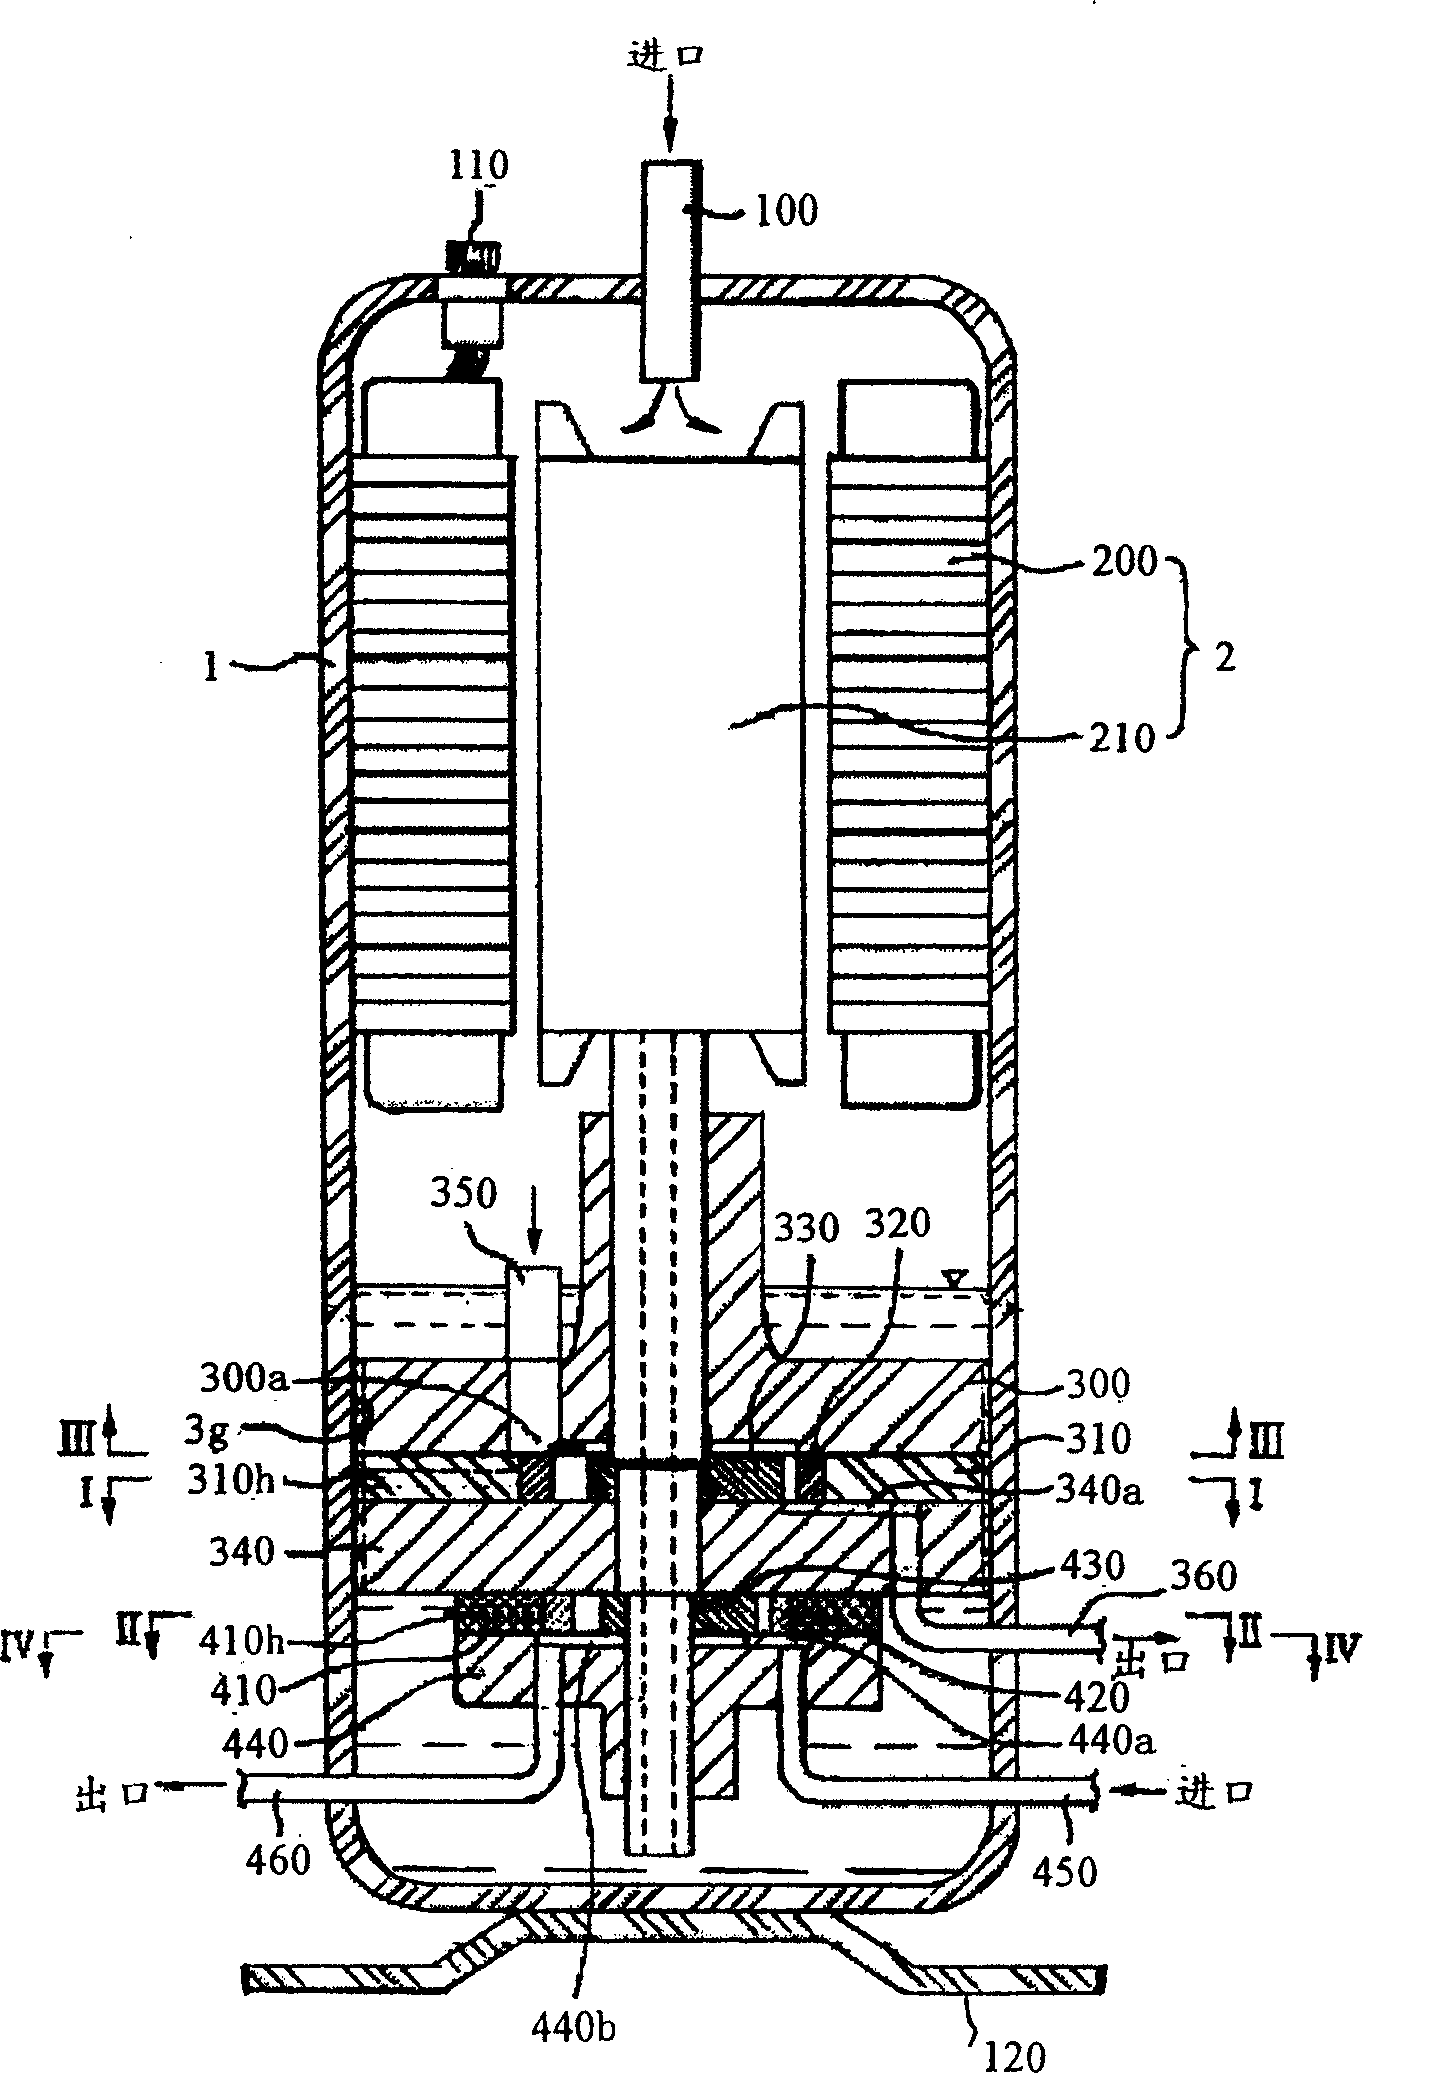 A gear type compressor